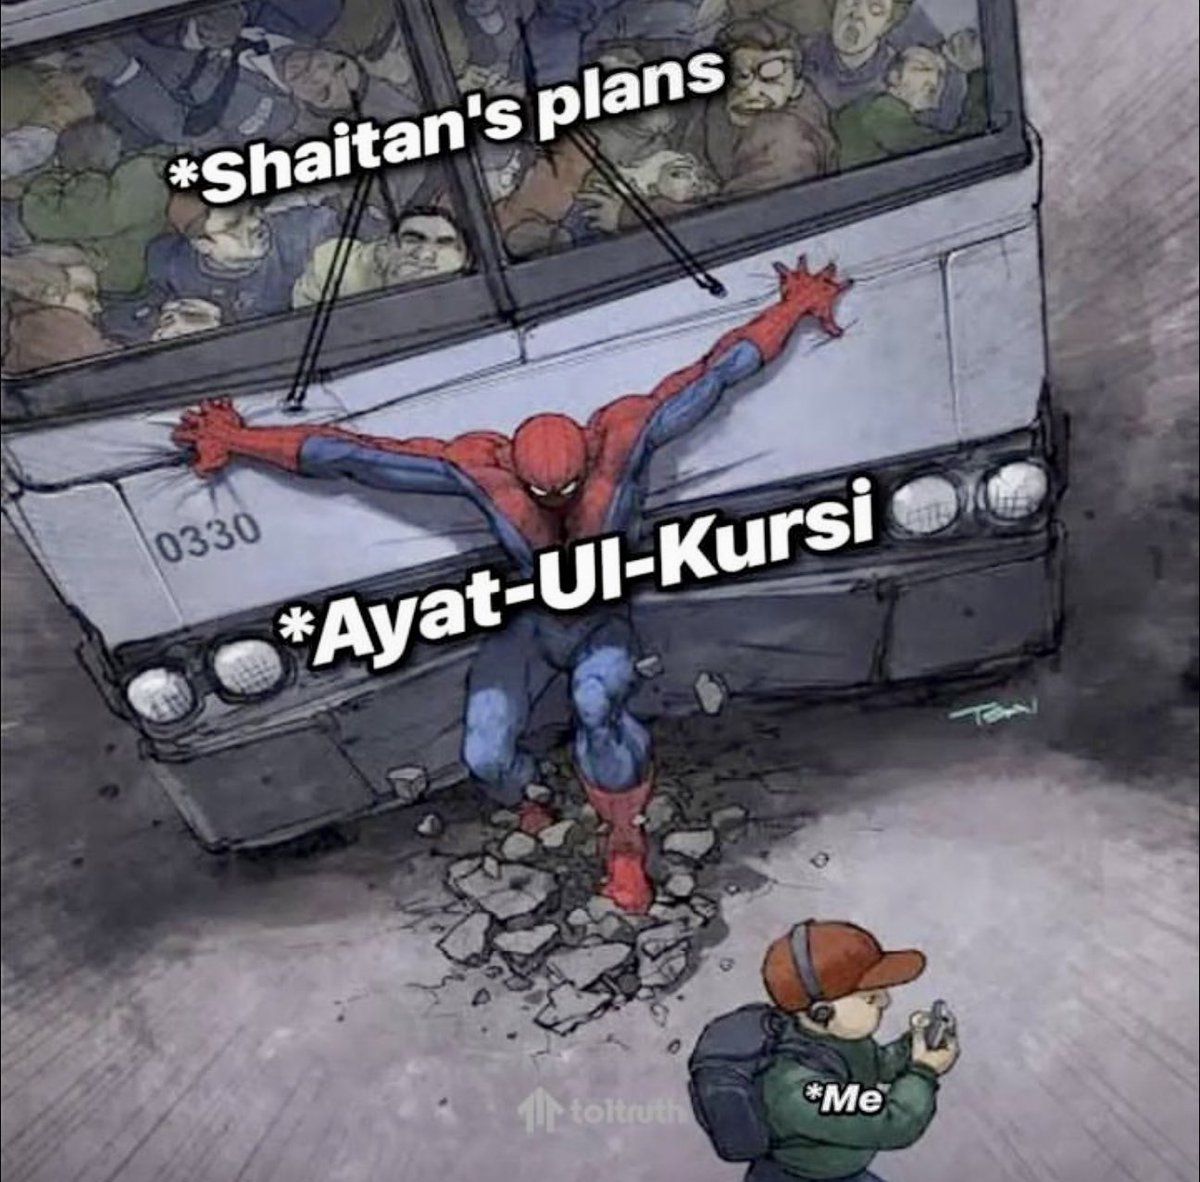 Ayatul Kursi is one of the most powerful Dua.